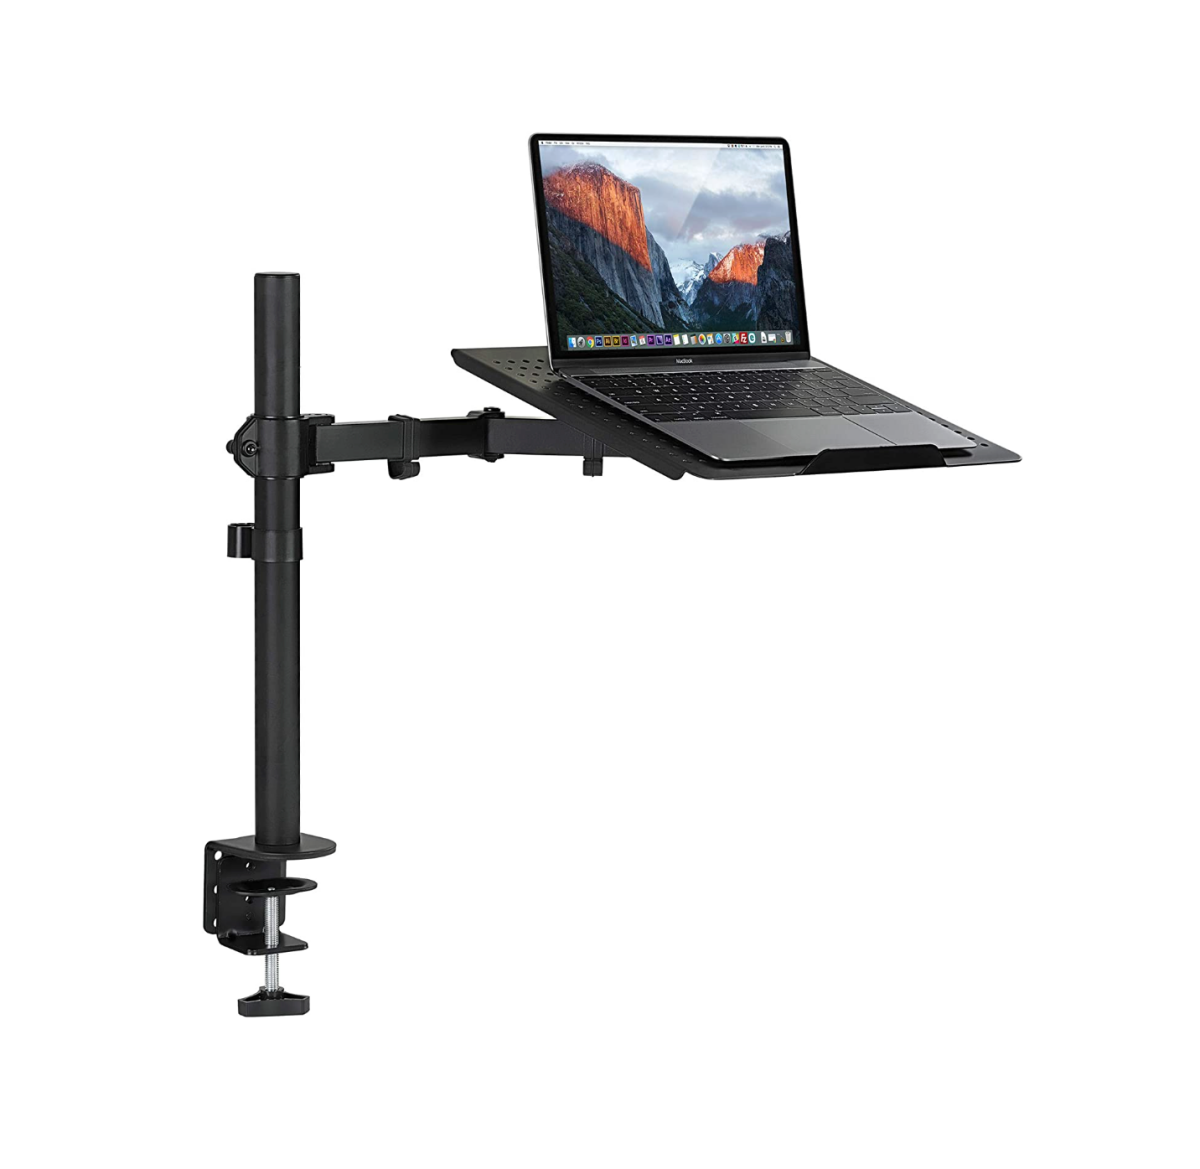 A Mount-It! Laptop Stand Desk Mount